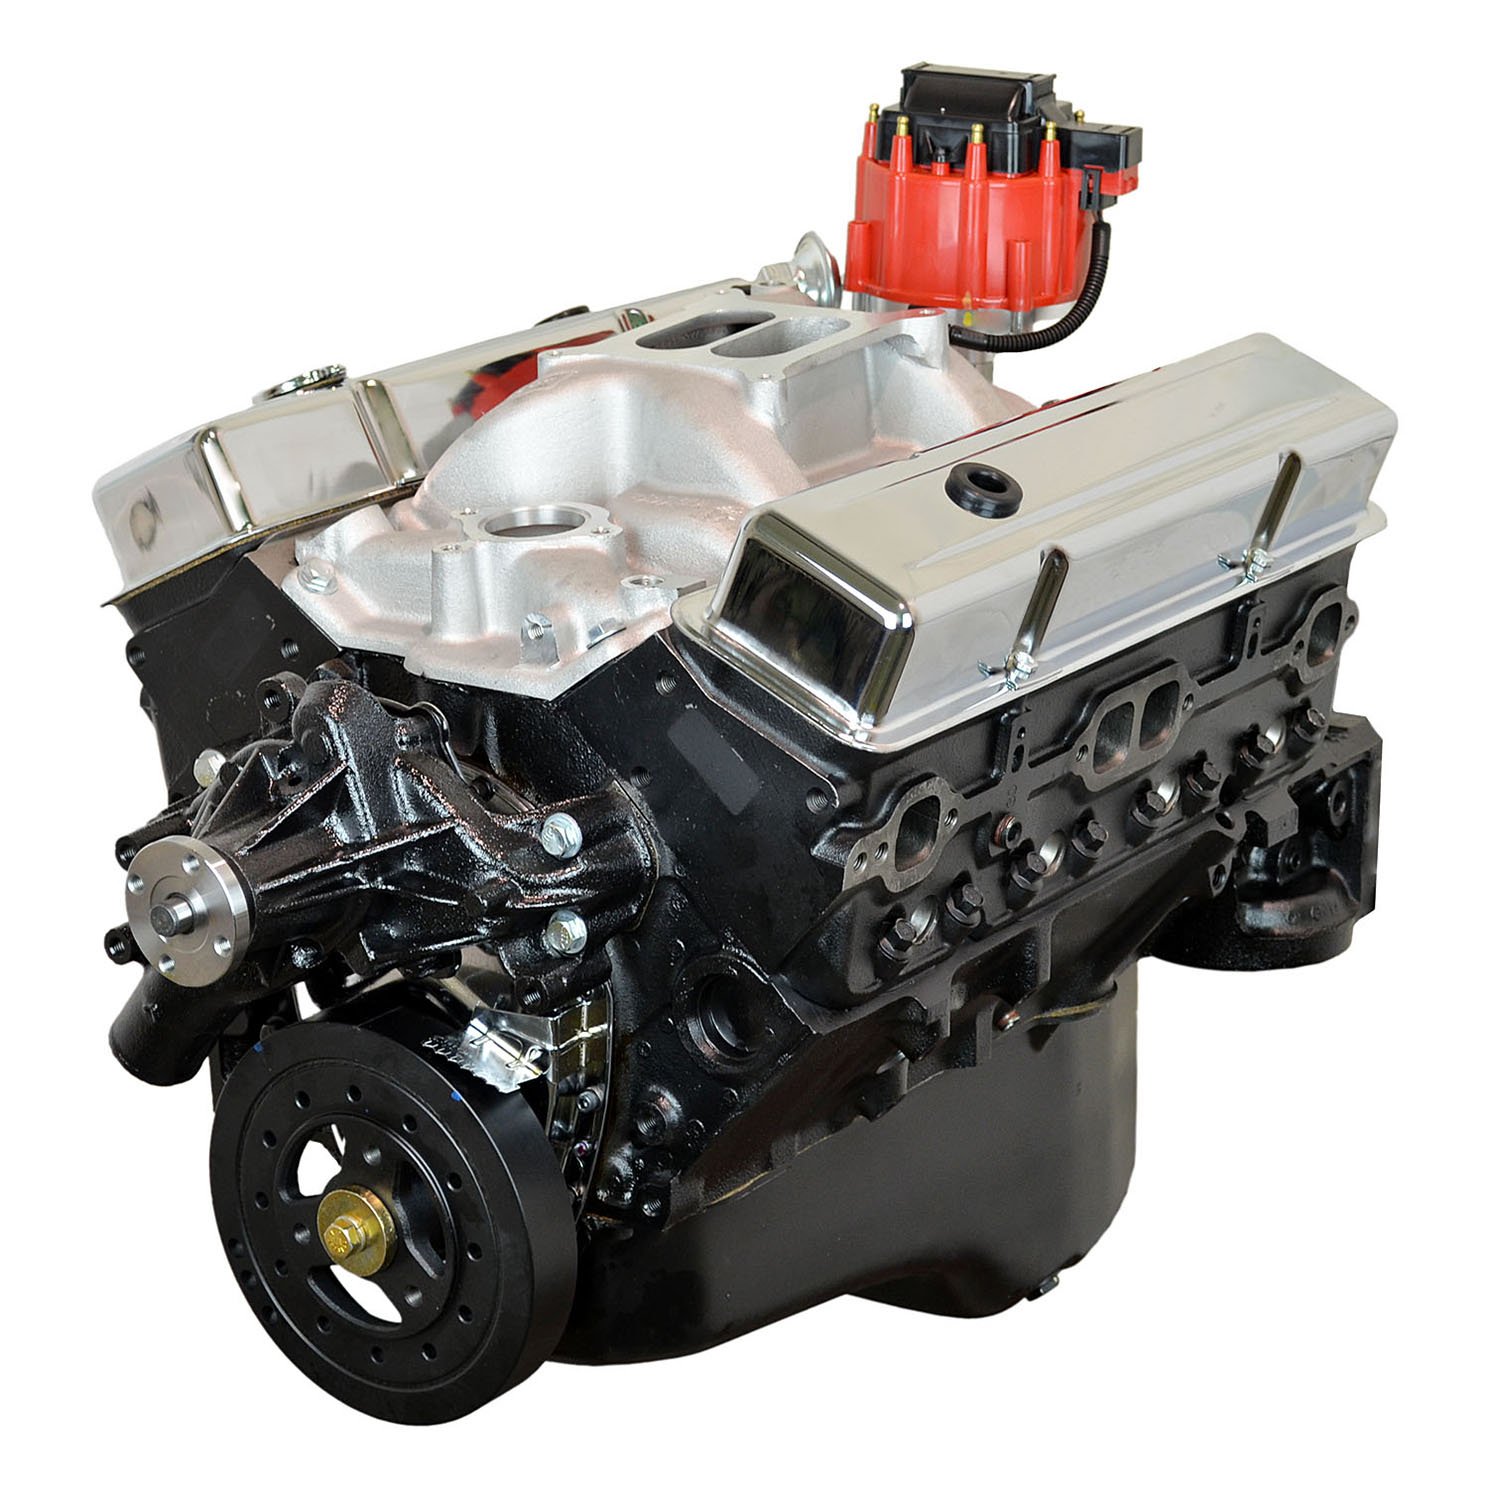 HP291PM High Performance Crate Engine Small Block Chevy 350ci / 330HP / 380TQ